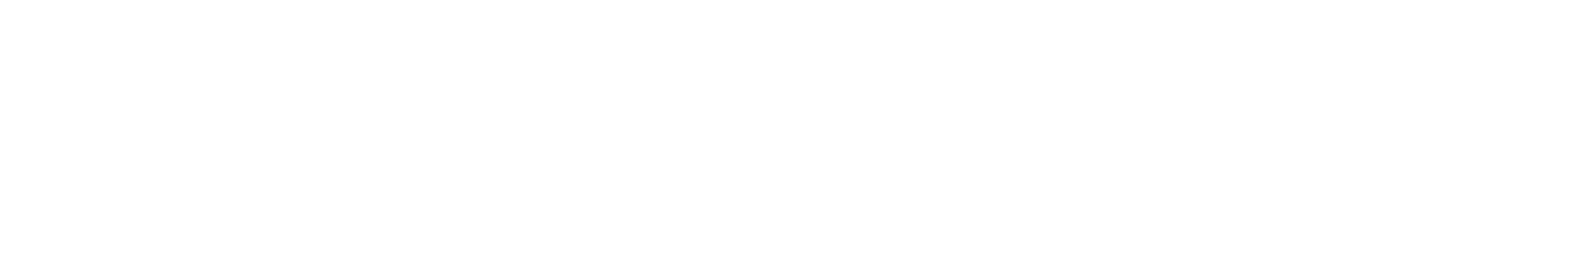 KeyCorp (KeyBank) logo large for dark backgrounds (transparent PNG)